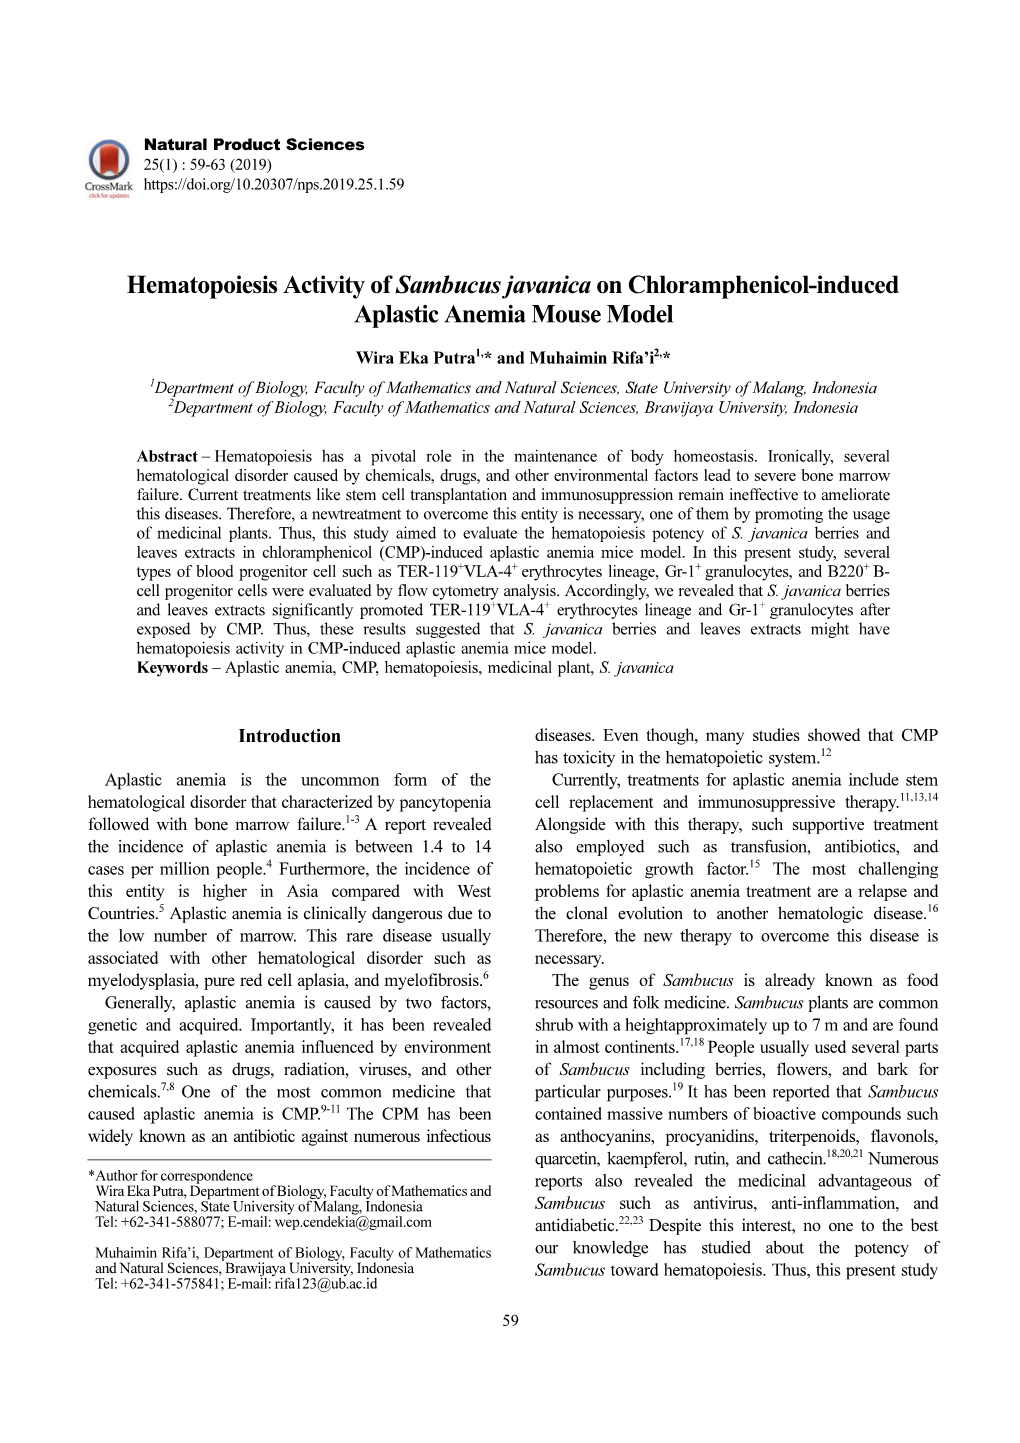 Hematopoiesis Activity of Sambucus Javanica on Chloramphenicol-Induced Aplastic Anemia Mouse Model